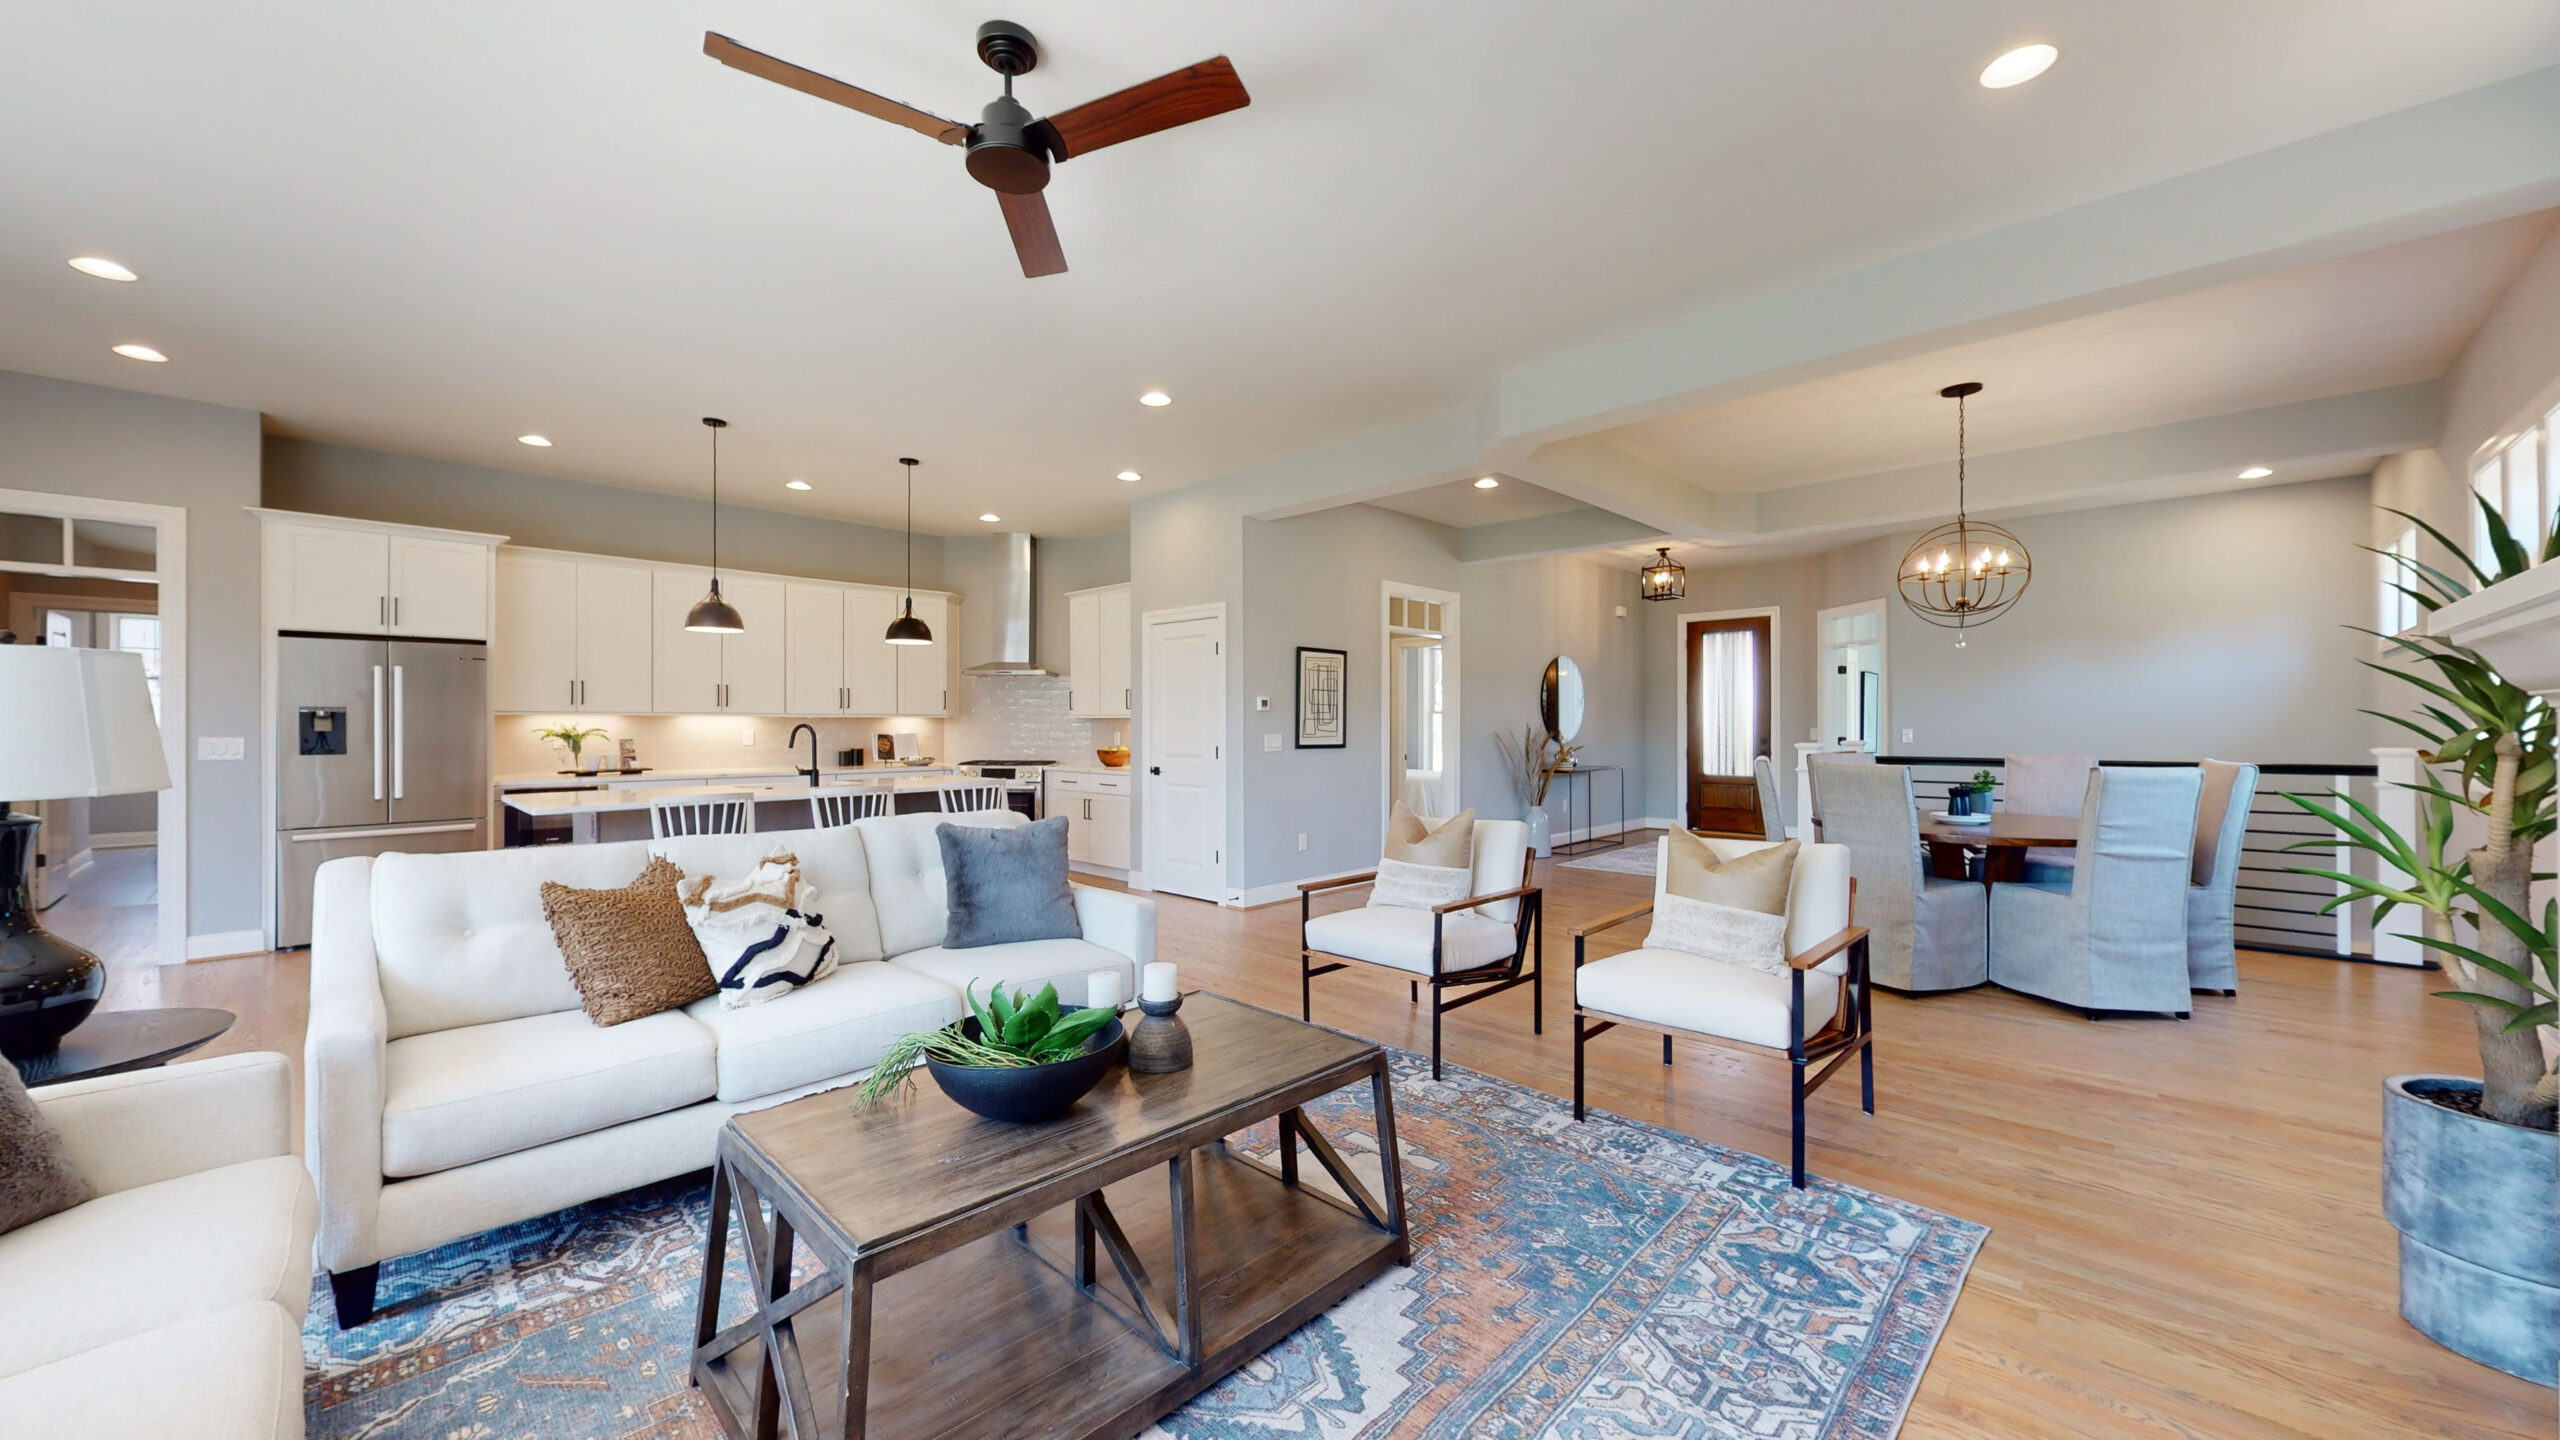 Beautifully designed living room furnishings in new custom Cincinnati home.